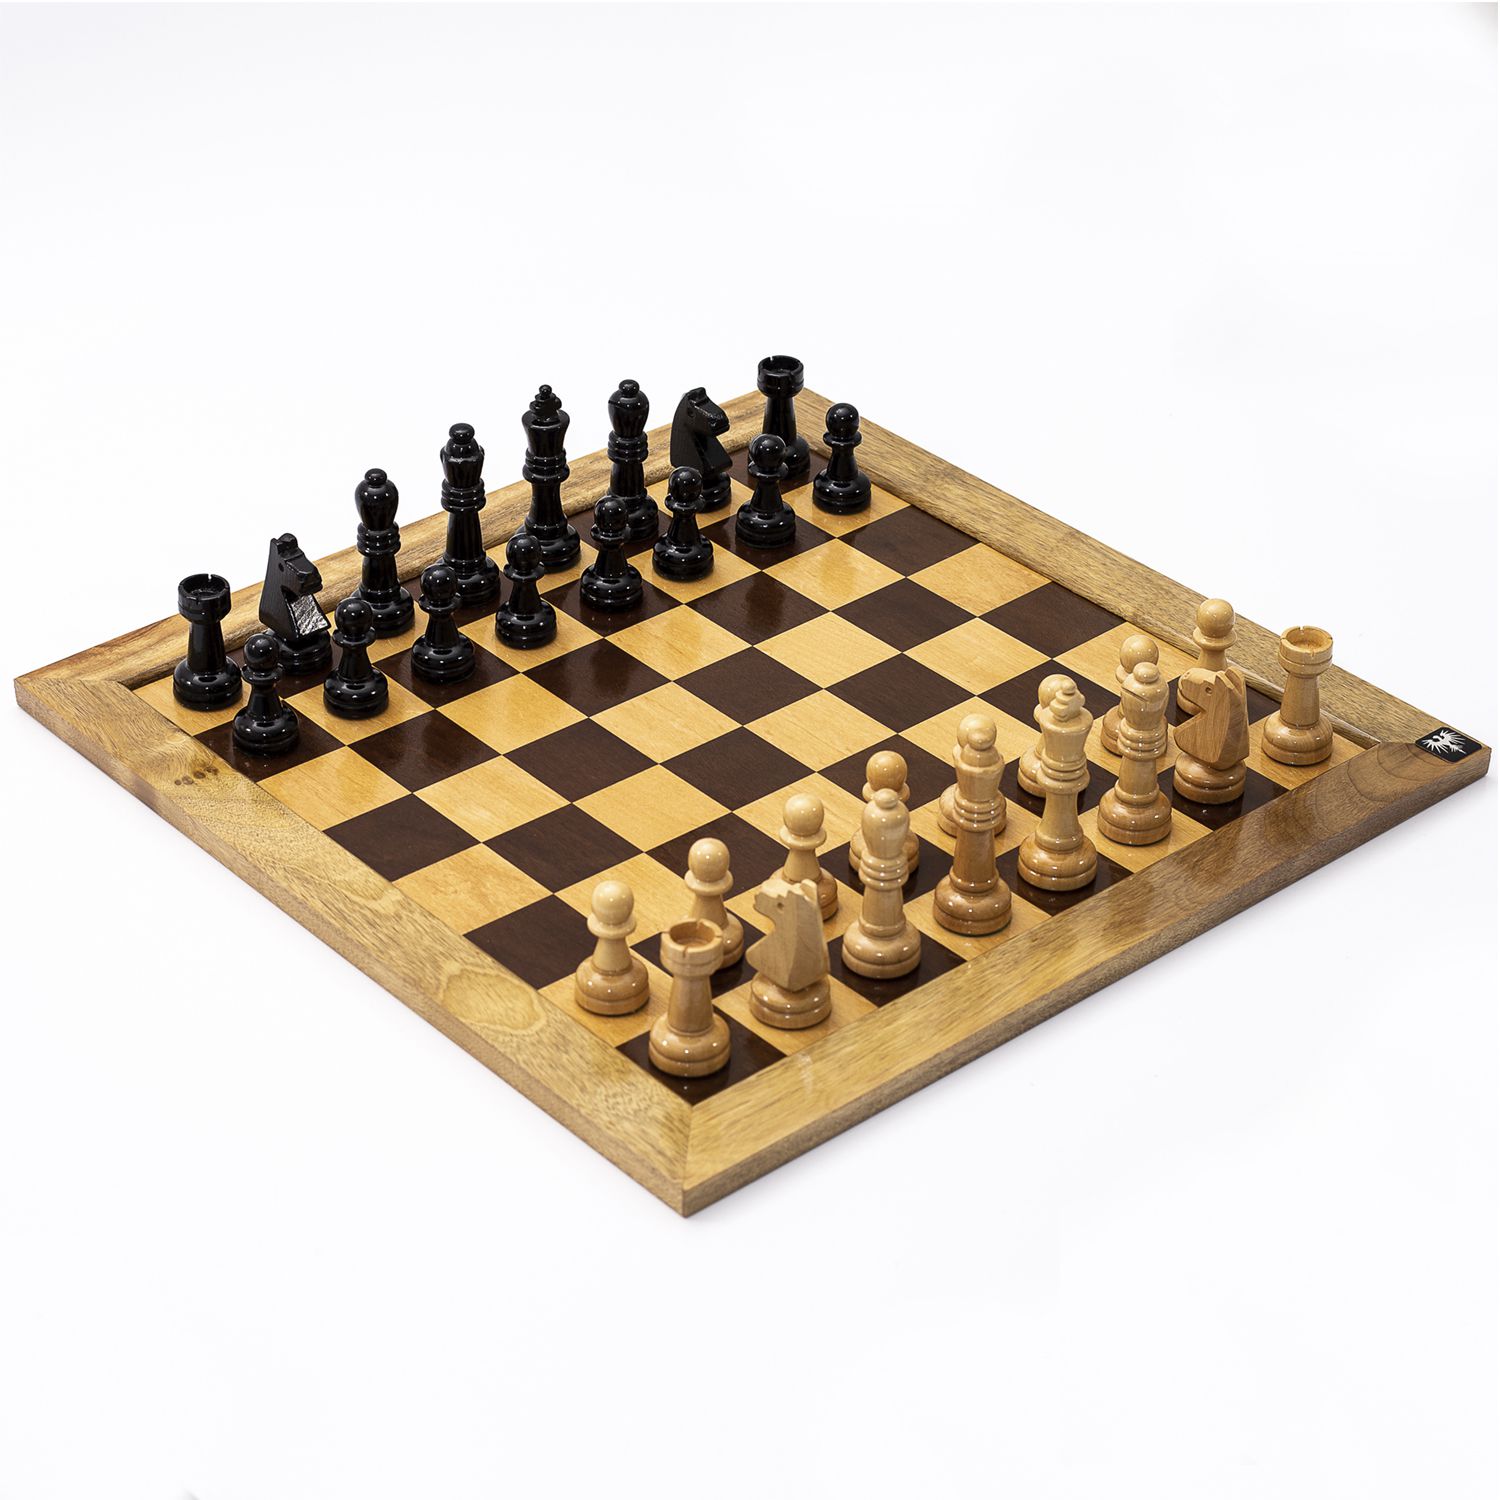 Quadro de xadrez e diferentes peças de xadrez